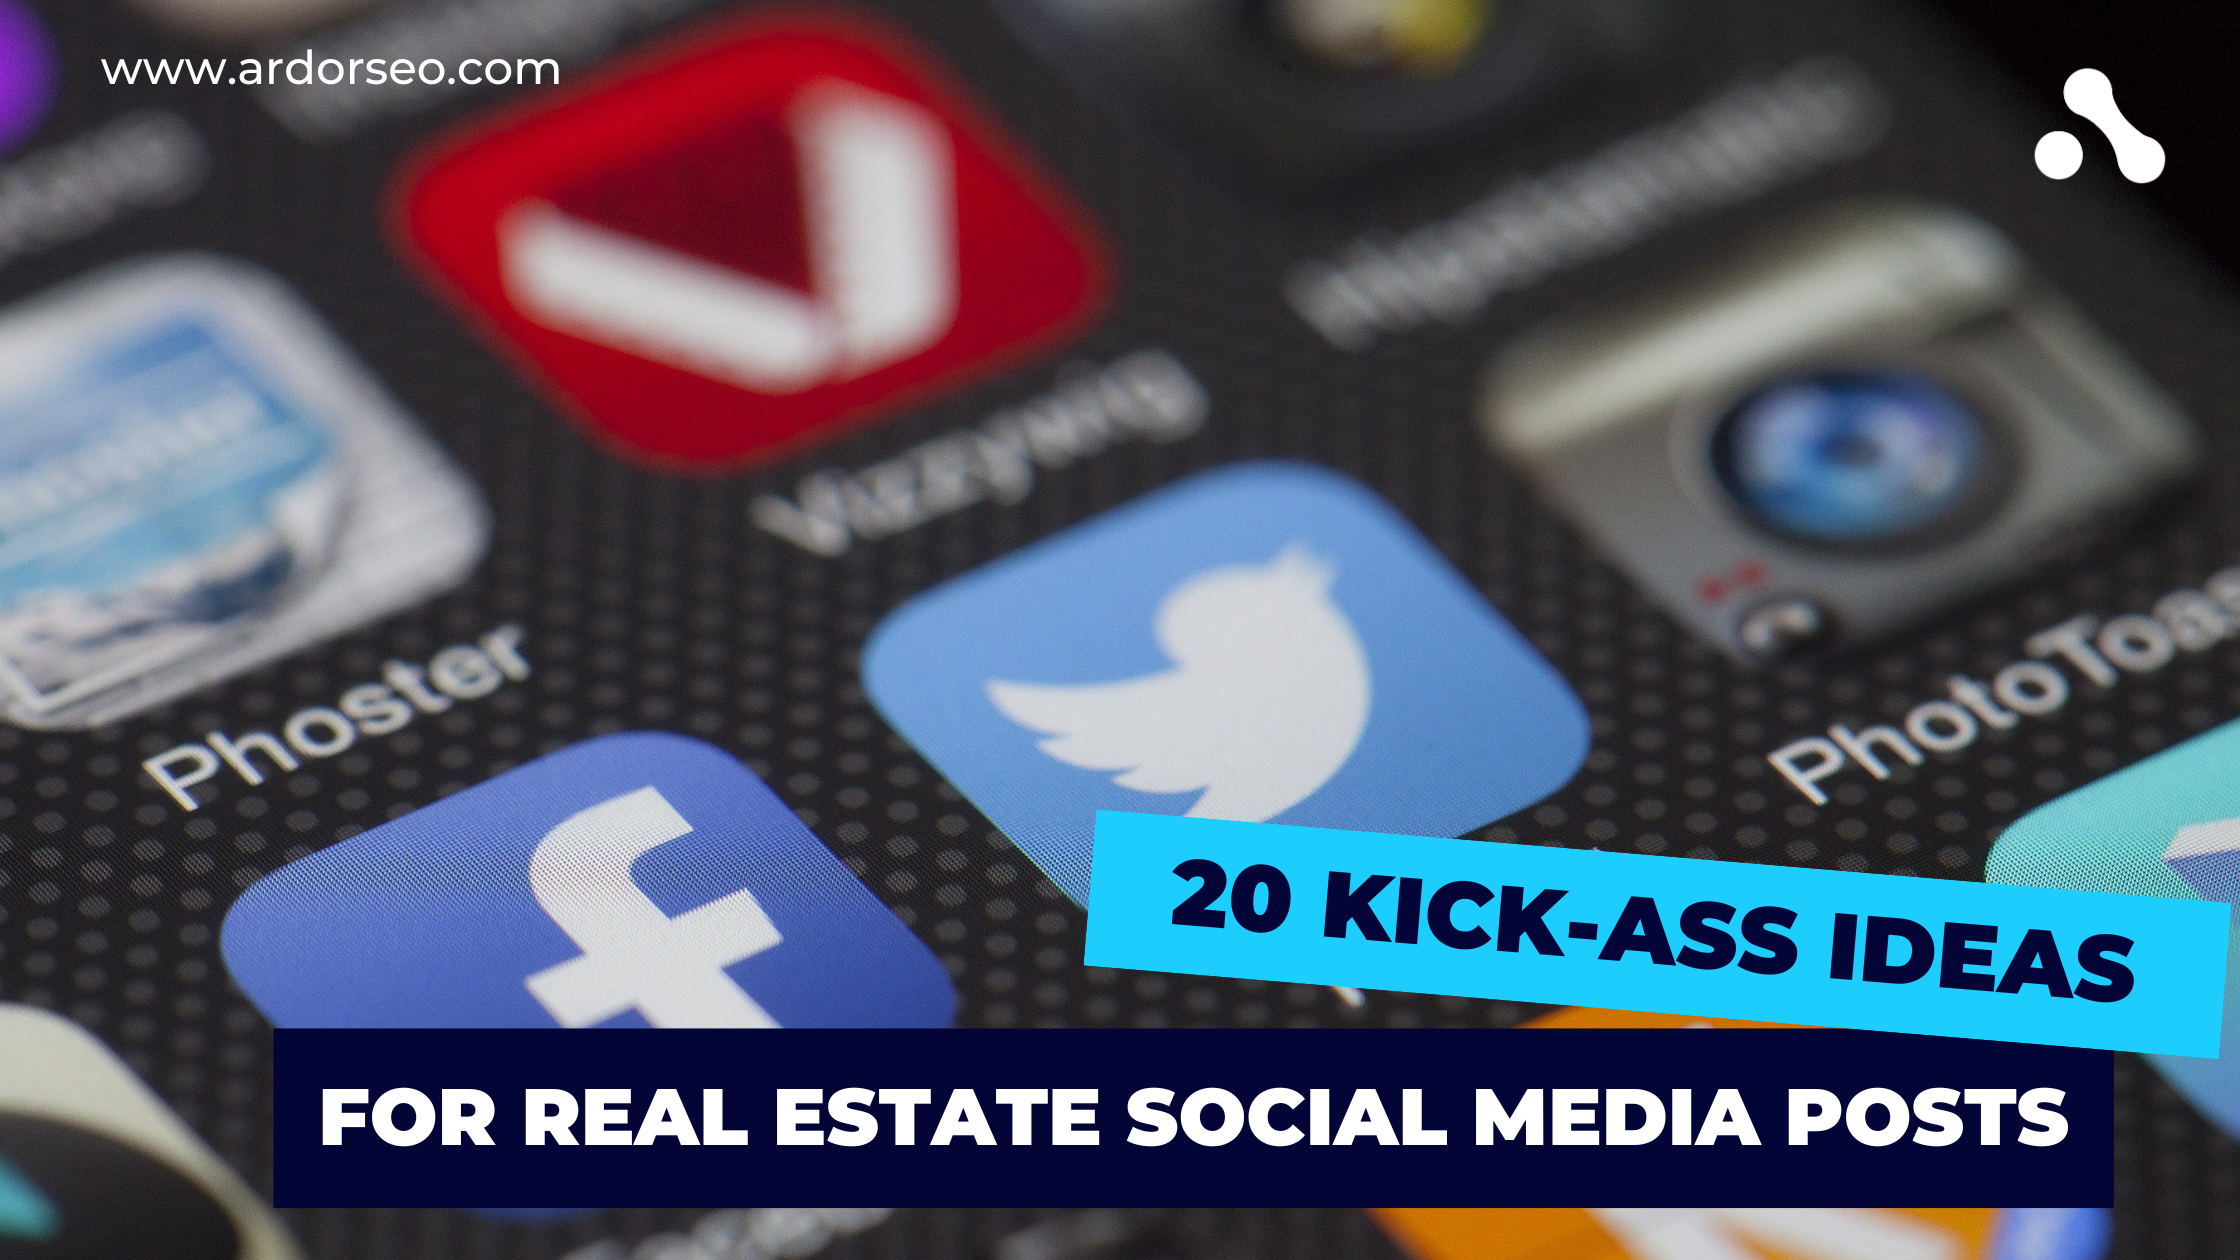 Real estate social media